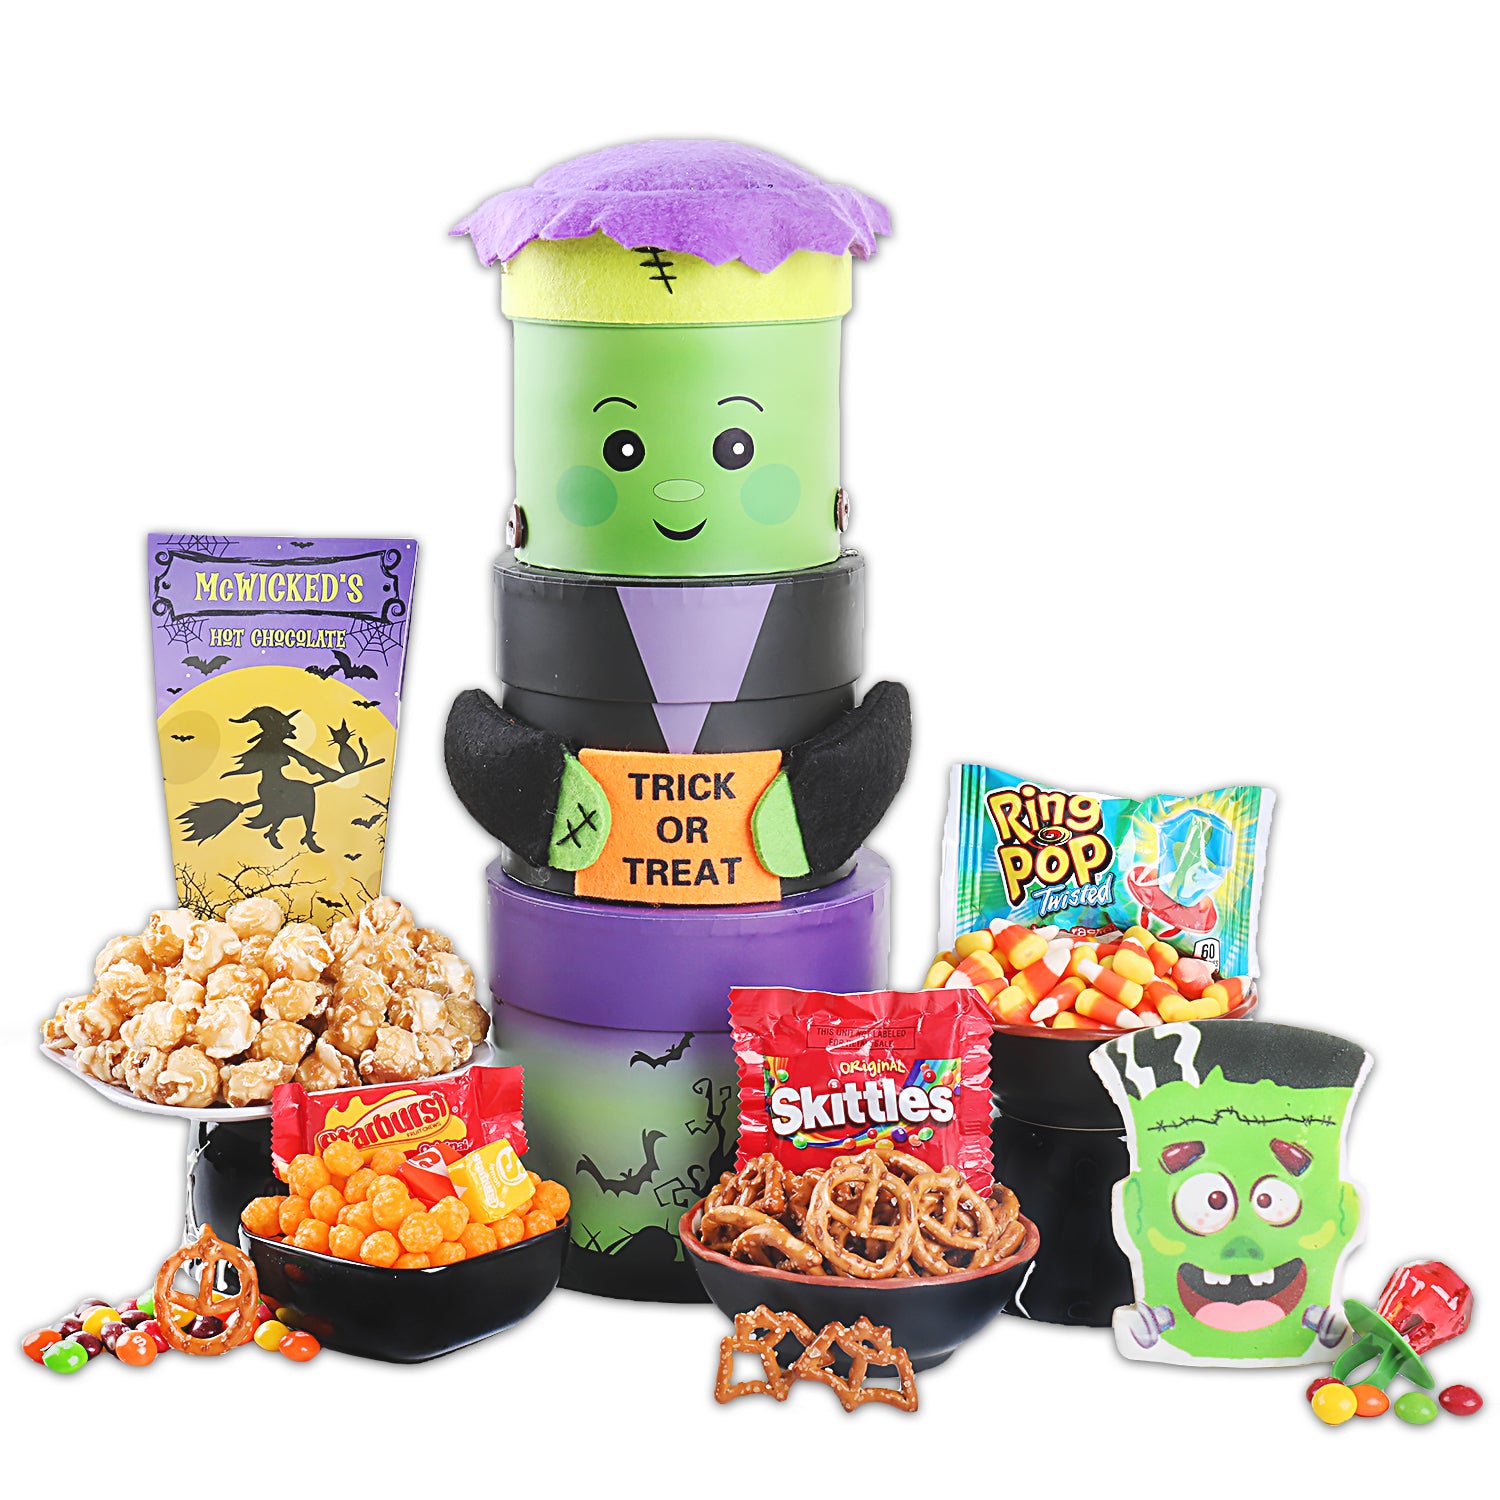  2 Utz Mini Cheese Balls (0.25oz. ea.), Tom Clark Caramel Popcorn (6oz.), Frankenstein Iced Cookie (2oz.), Witches Brew Orange Hot Chocolate (2oz.), Candy Corn (6oz.), Fun Size Skittles (0.5oz.), 2 Halloween Pretzels Bats & Jacks (0.5oz. ea.), Starbursts Fun Size Chewy Candy (1oz.), Halloween Ring Pops (0.5oz.), Frankenstein 3-High Tower